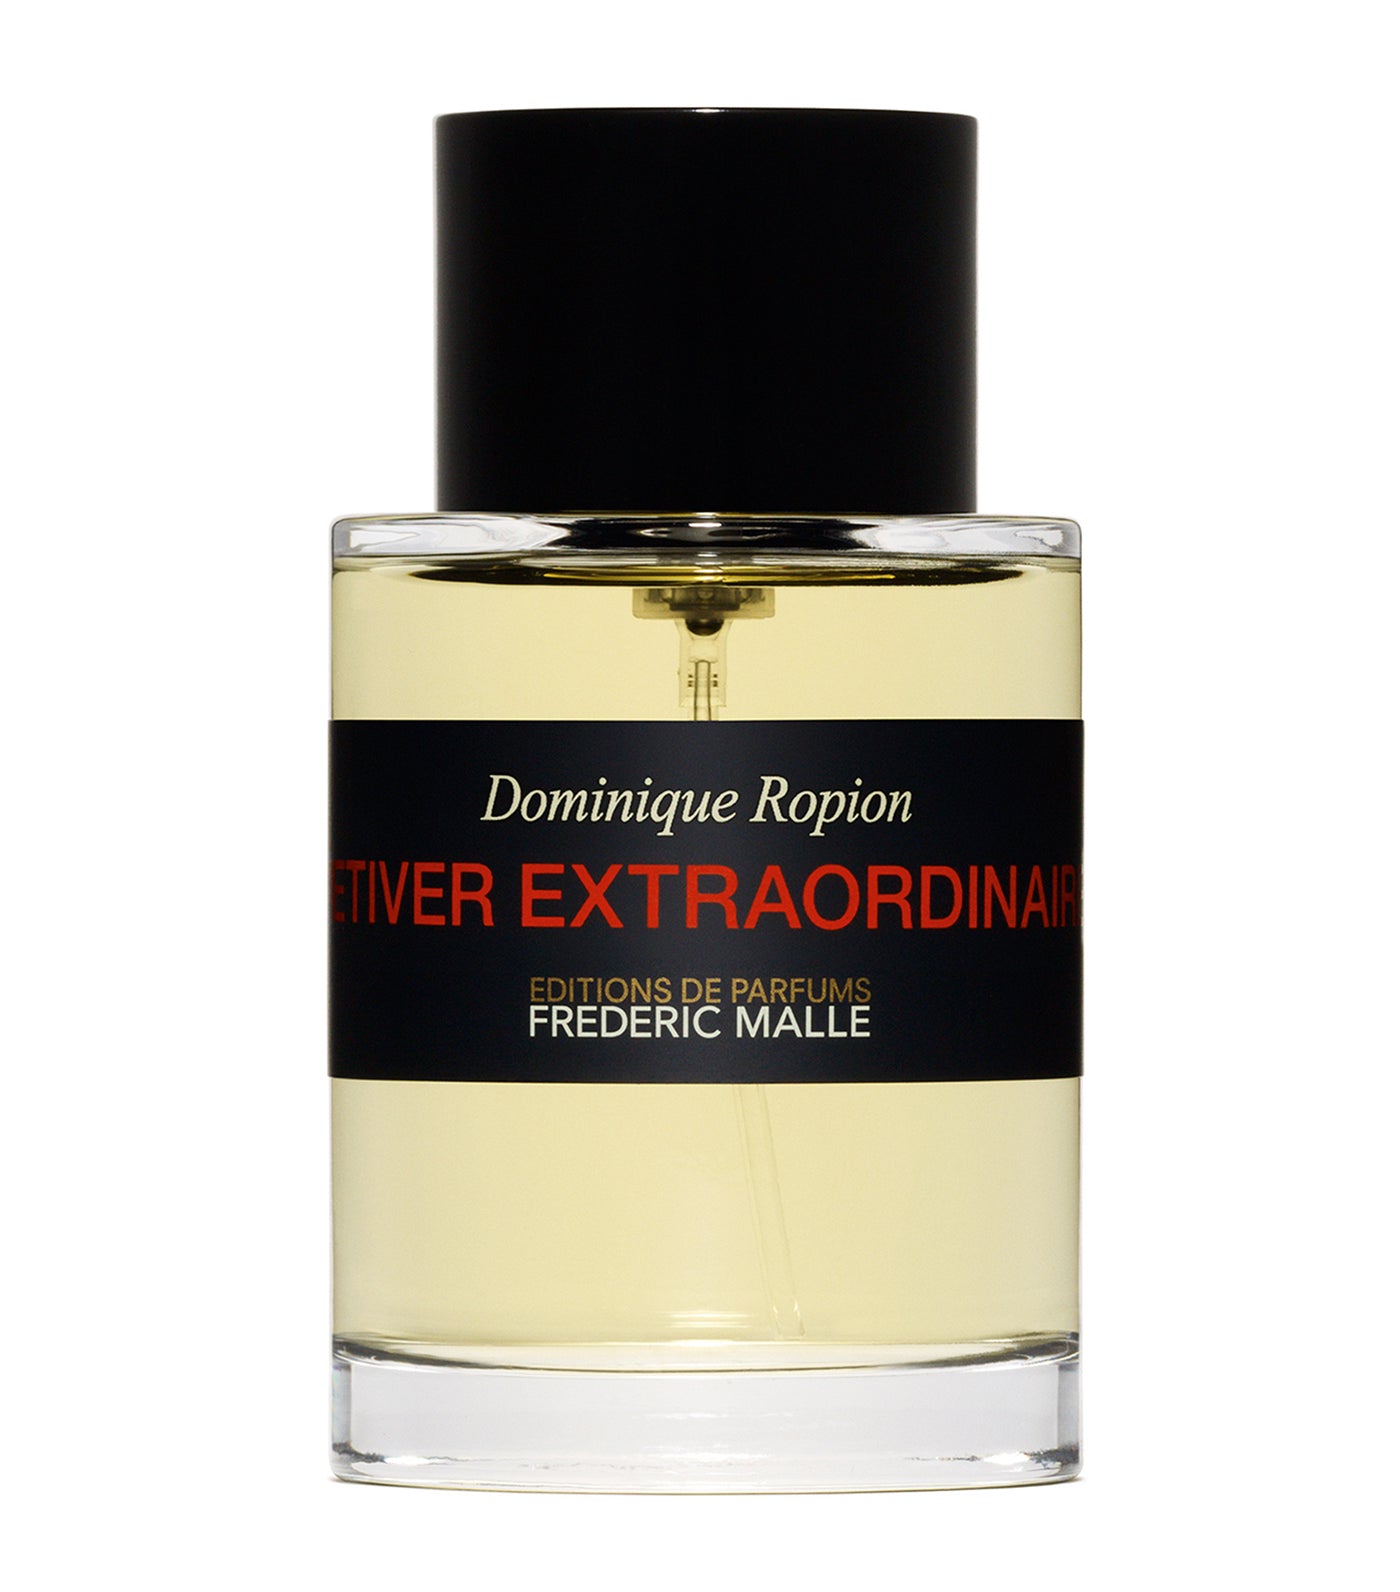 Vetiver Extraordinaire Perfume by Dominique Ropion